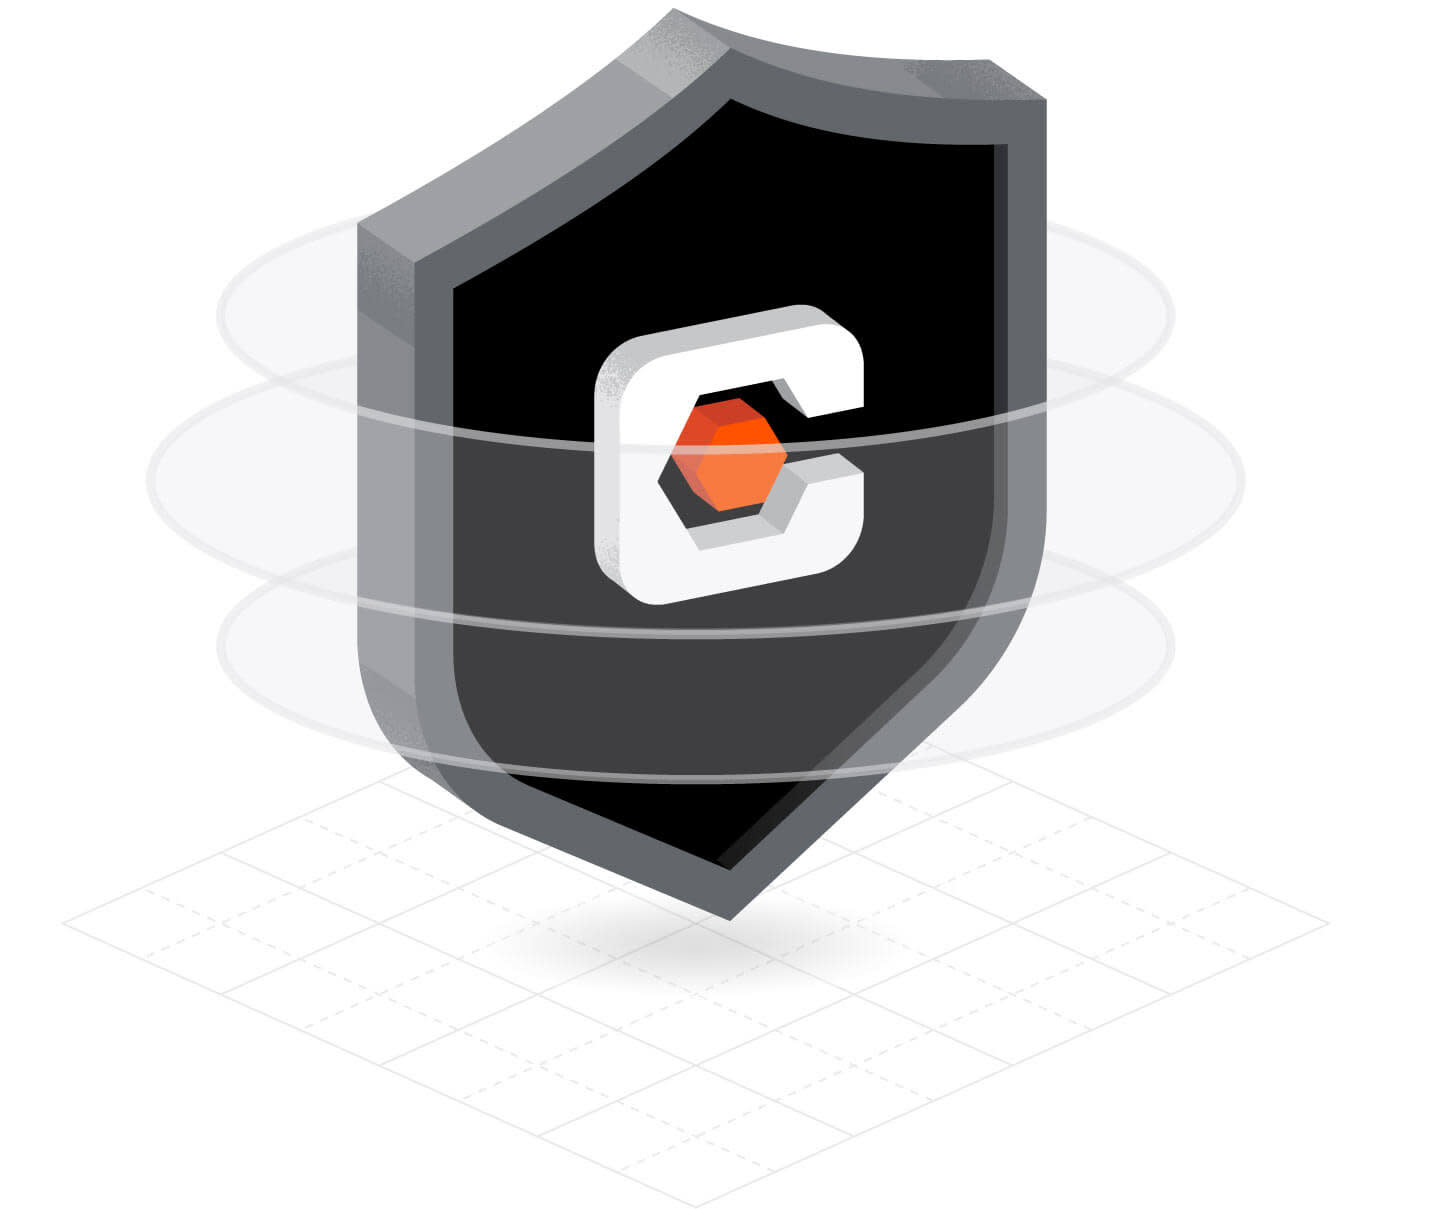 Procore security badge illustration 